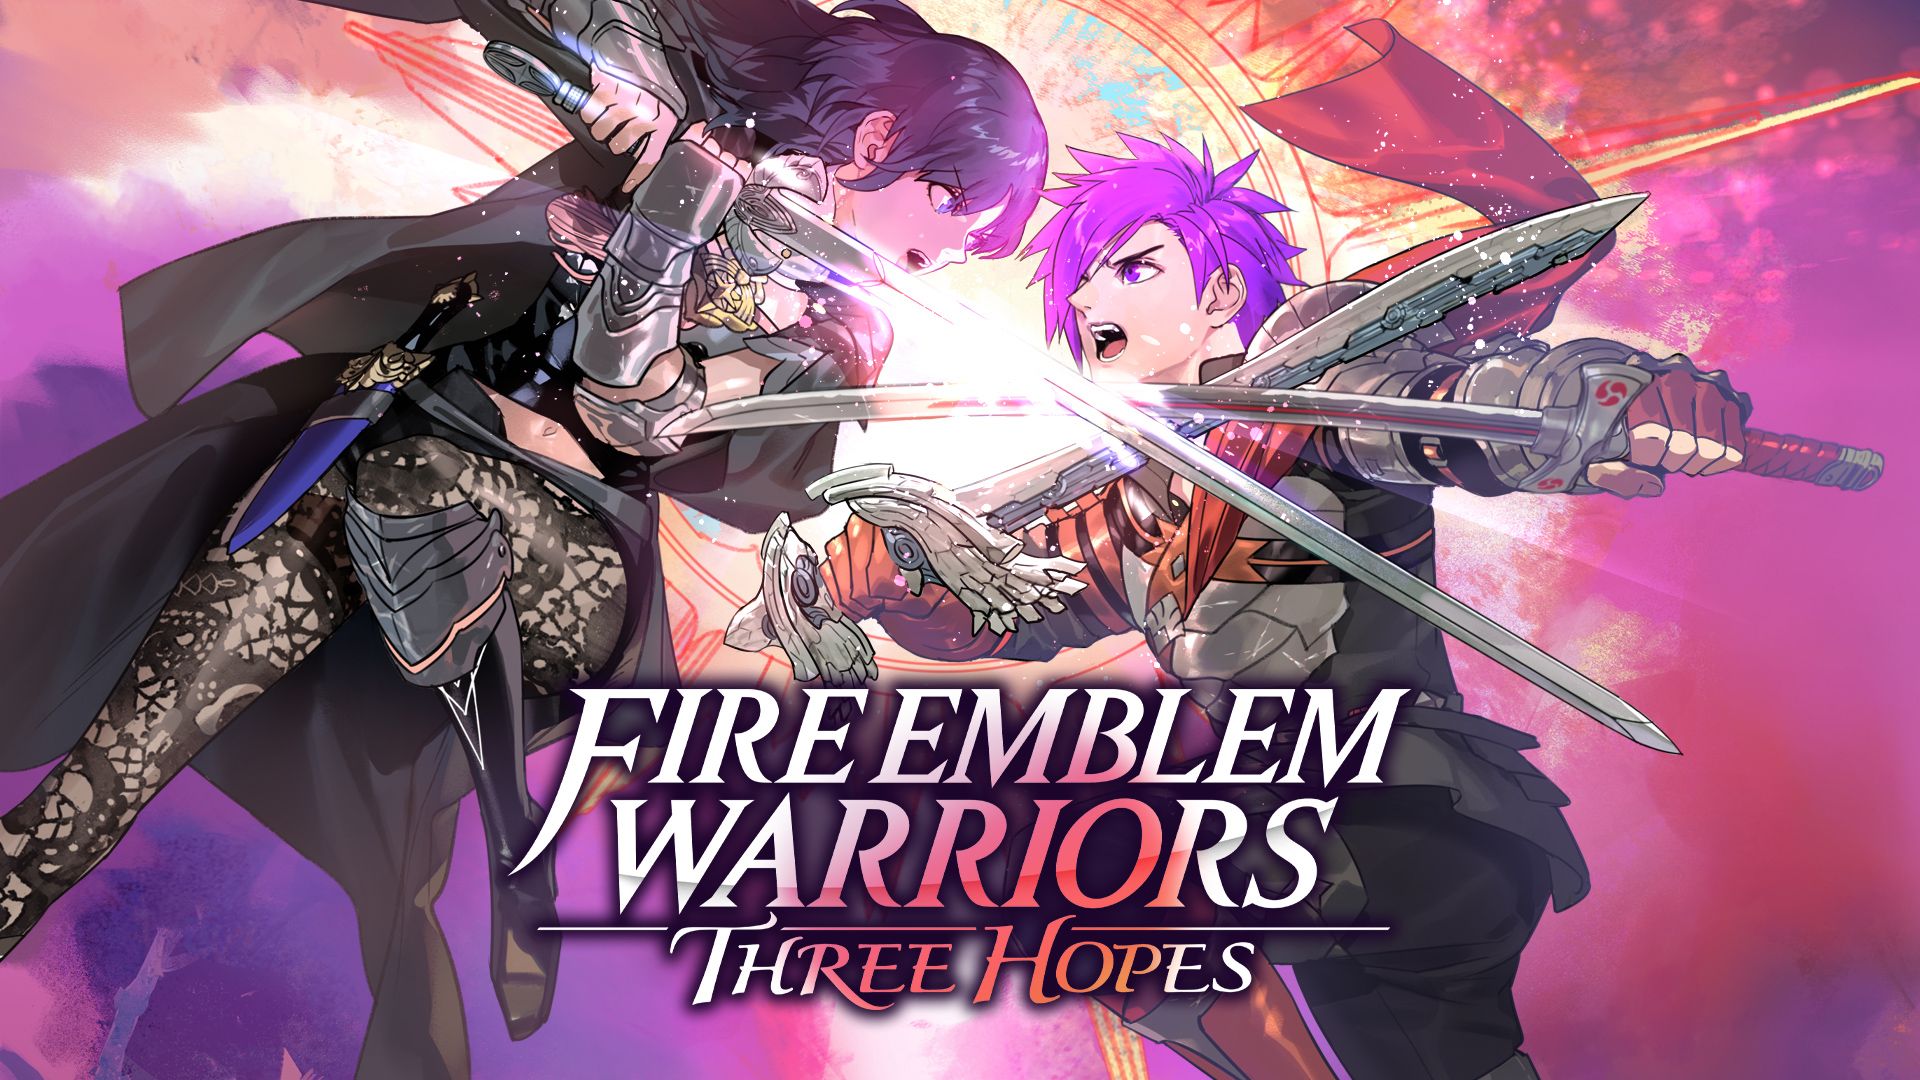 Video: Fire Emblem Warriors: Three Hopes trailer